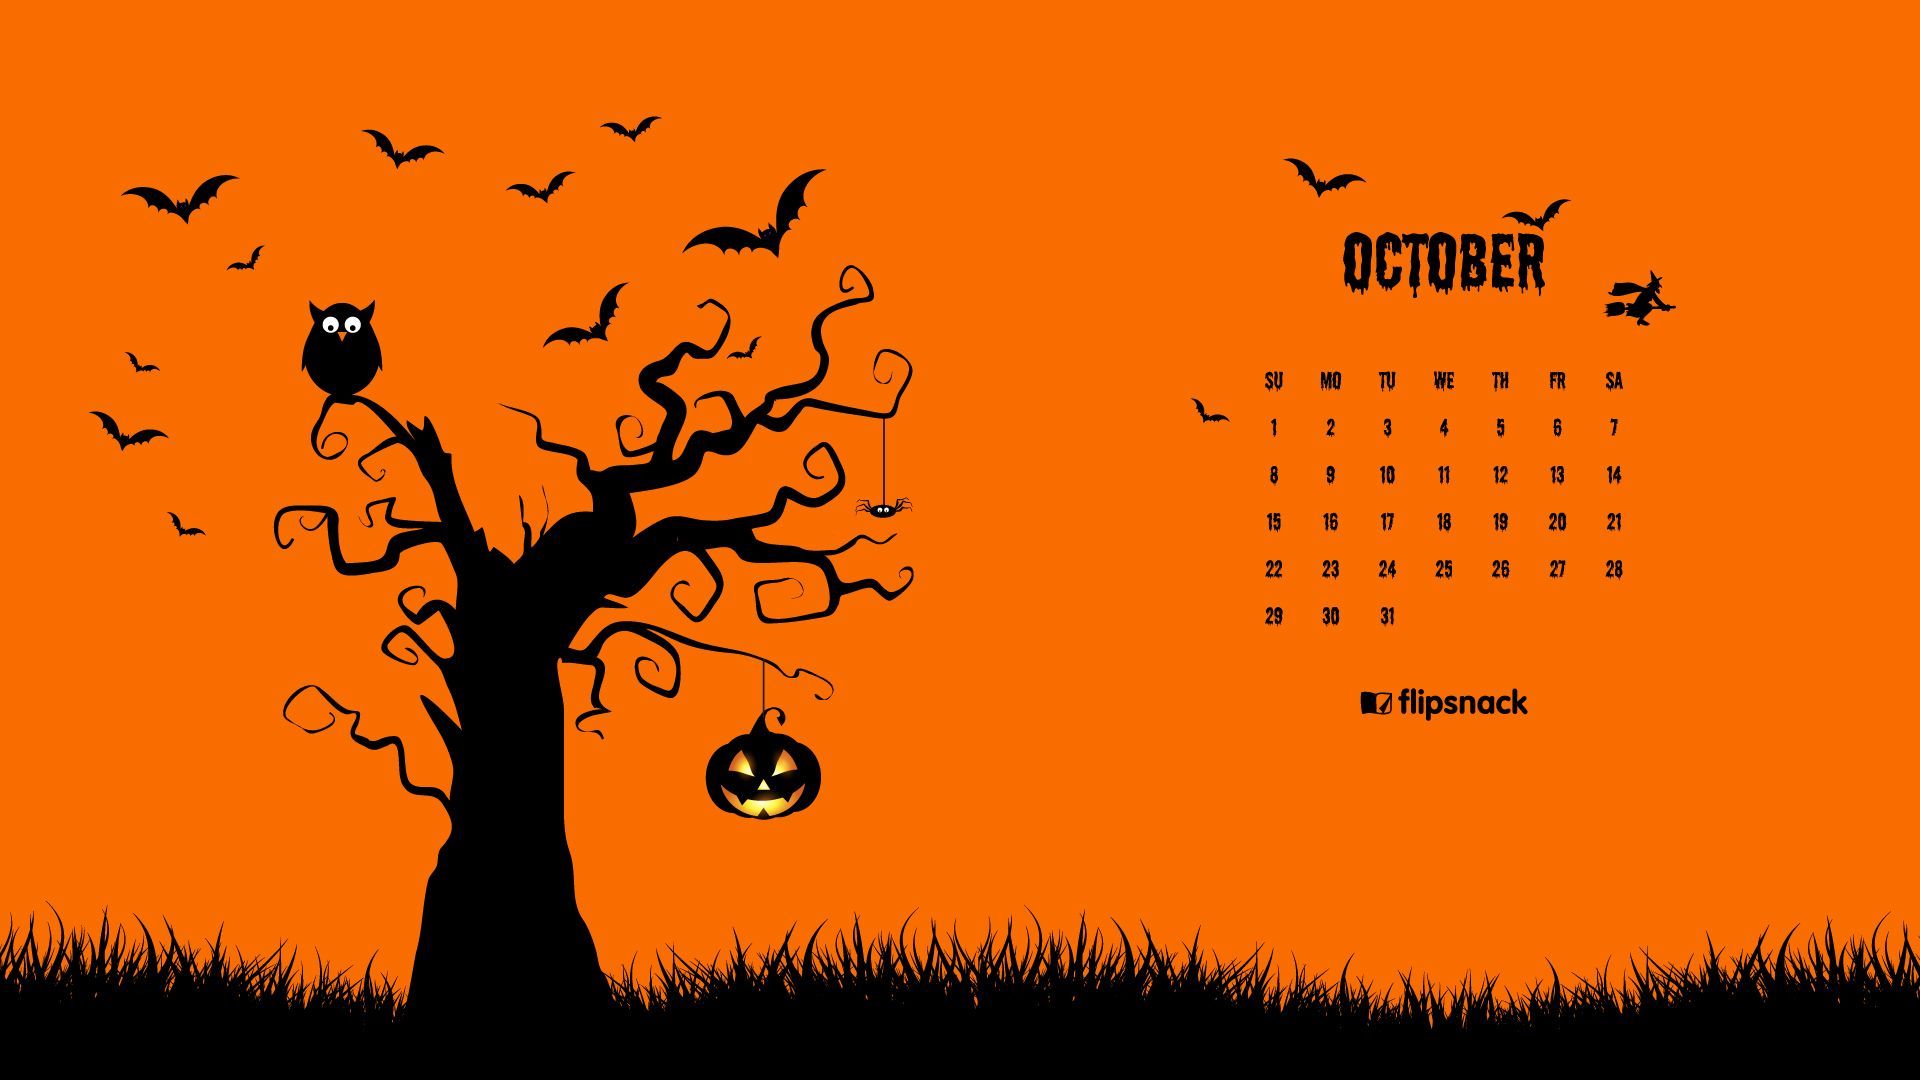 October 2017 calendar wallpaper for desktop background. Calendar , Calendar wallpaper, October wallpaper